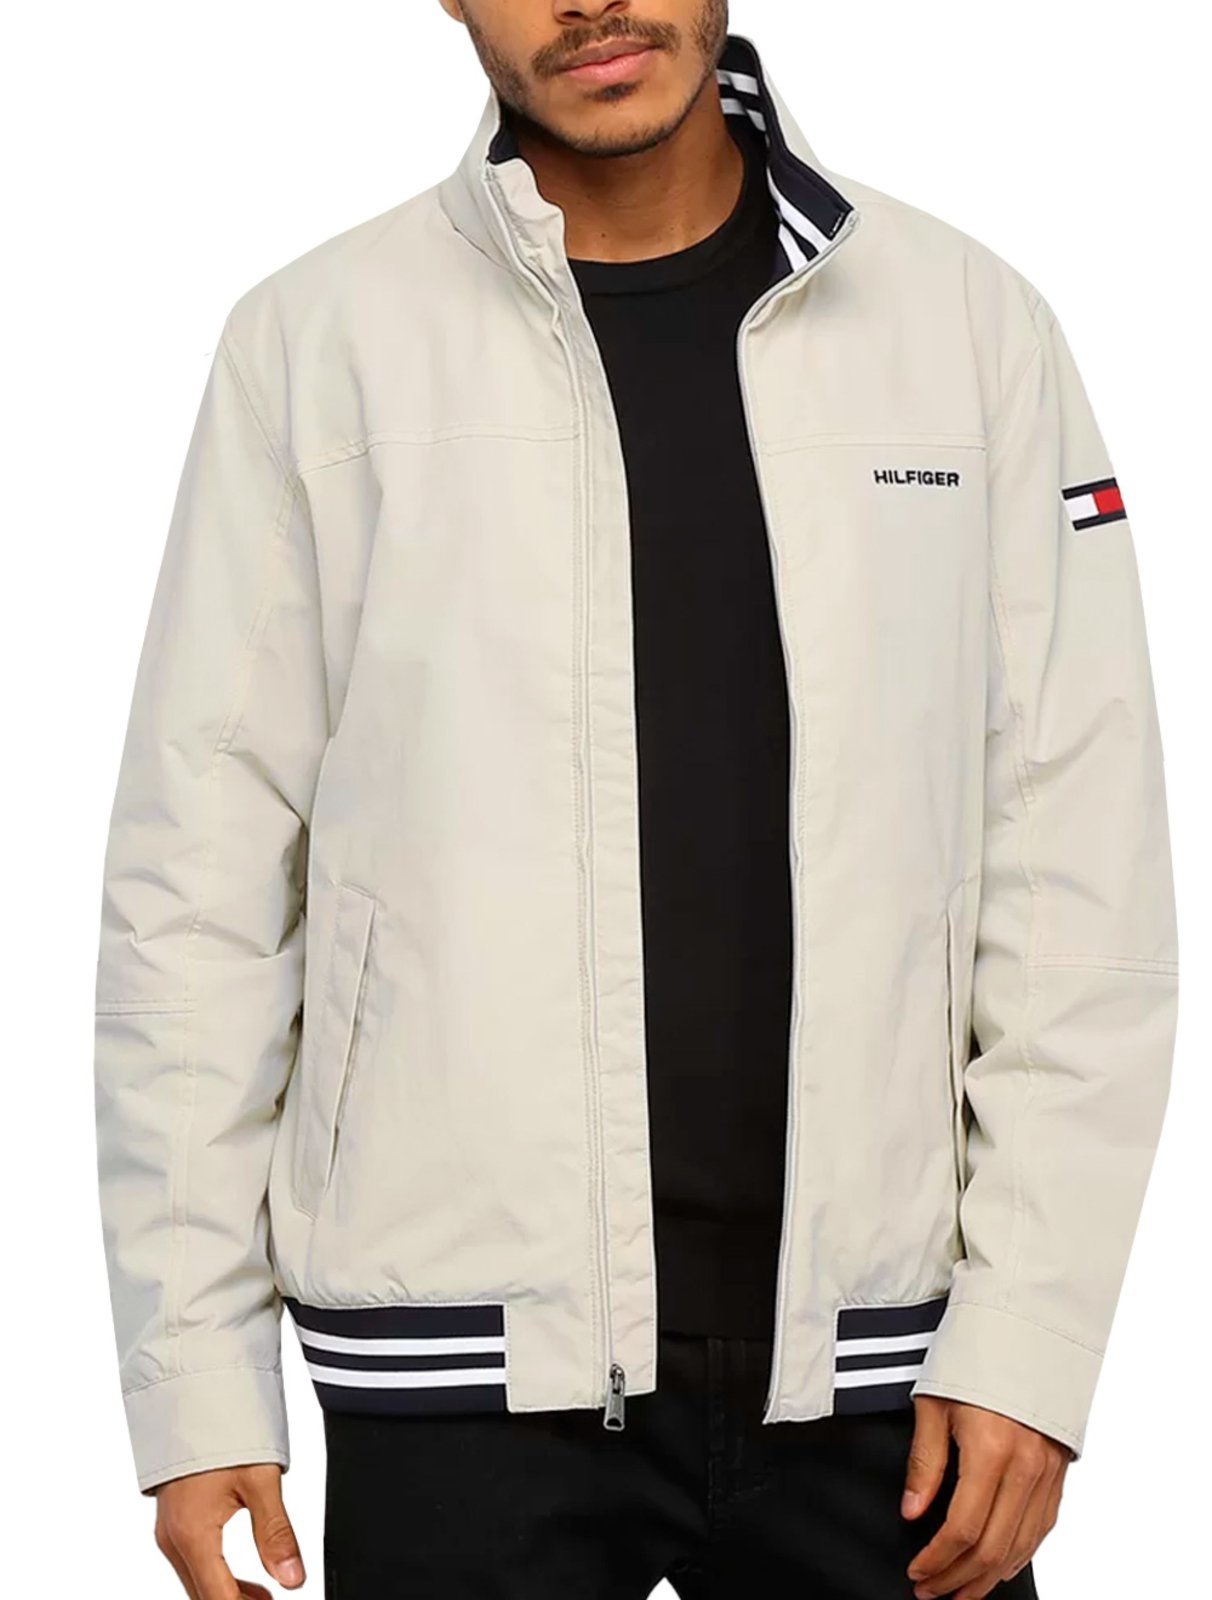 Jaqueta Tommy Hilfiger Masculina Regatta Jacket Off-White - Compre